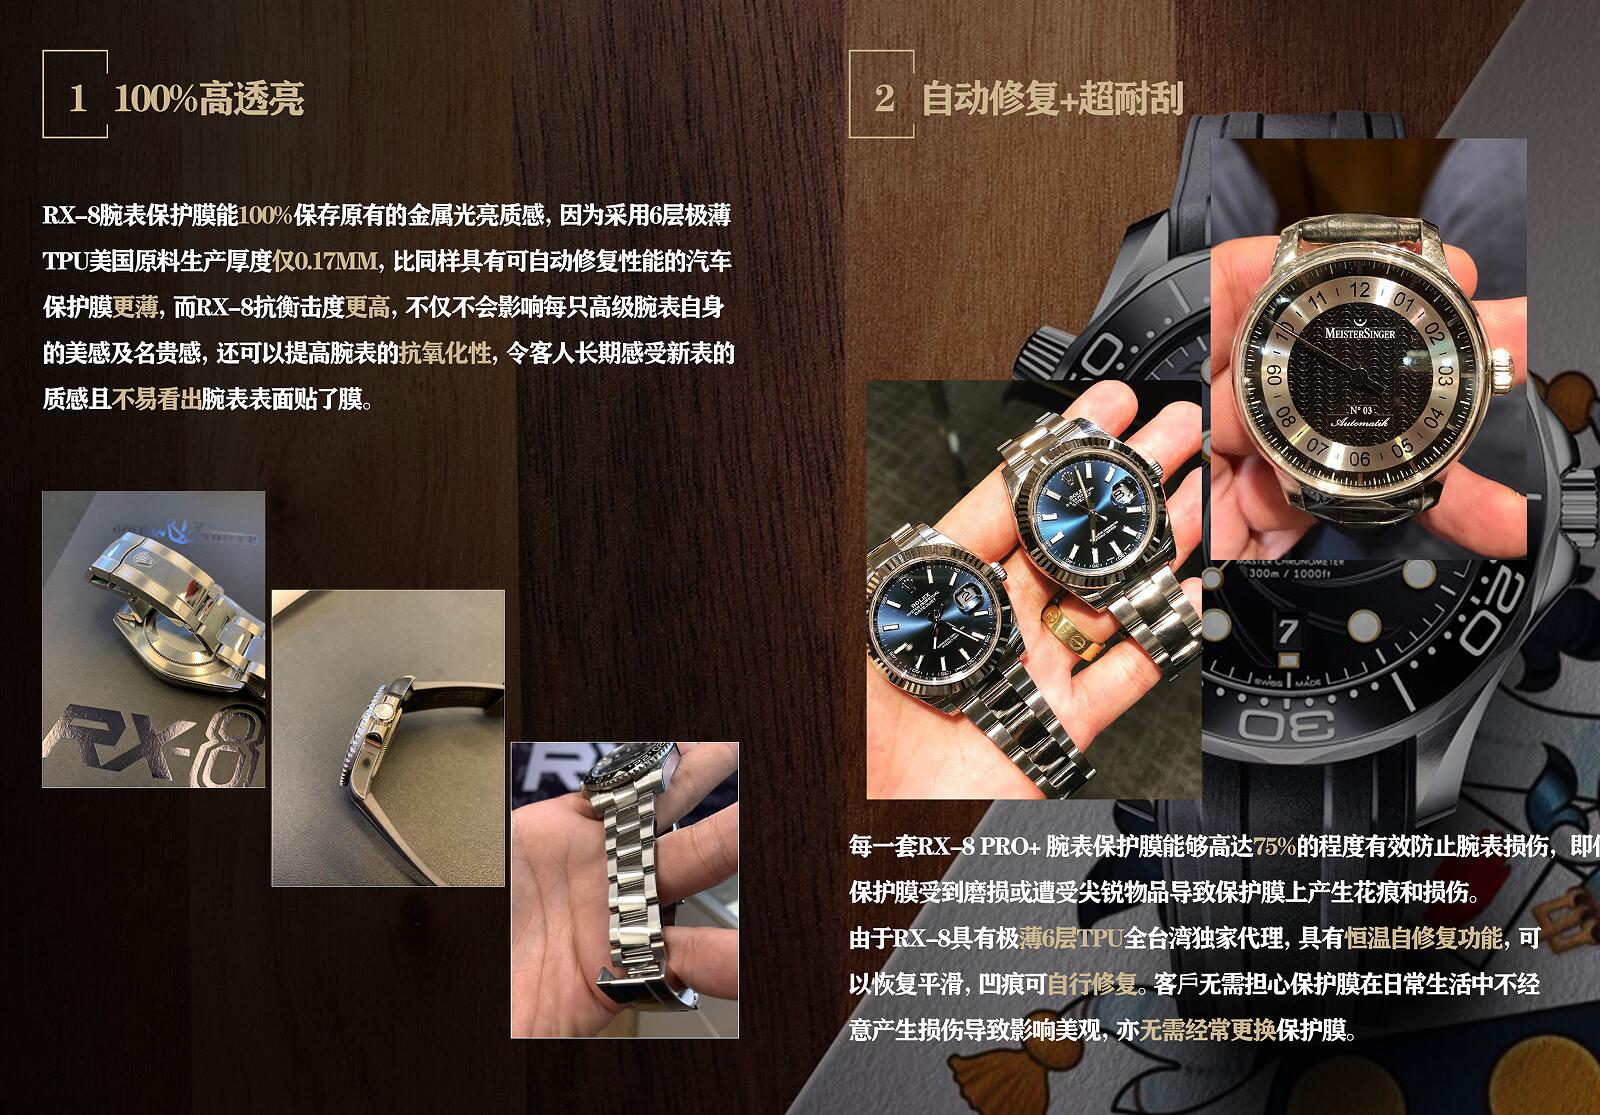 RX8贴膜适用于百达翡丽pp5711 手表保护膜 外表圈表盘表扣